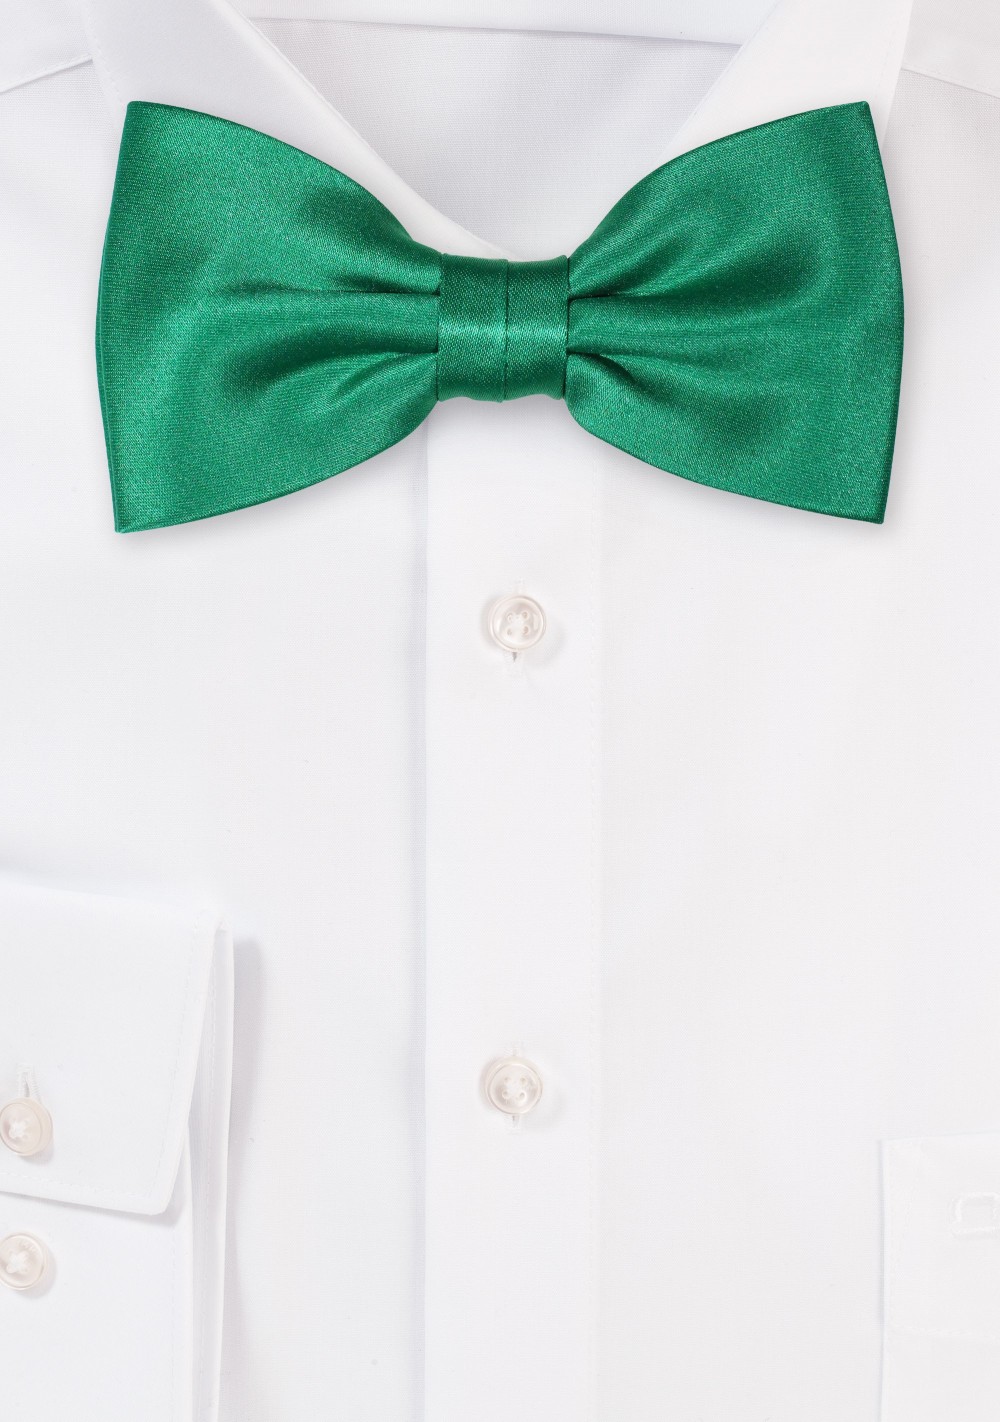 New formal men's pre tied Bow tie & Pocket Square Hankie solid emerald green 